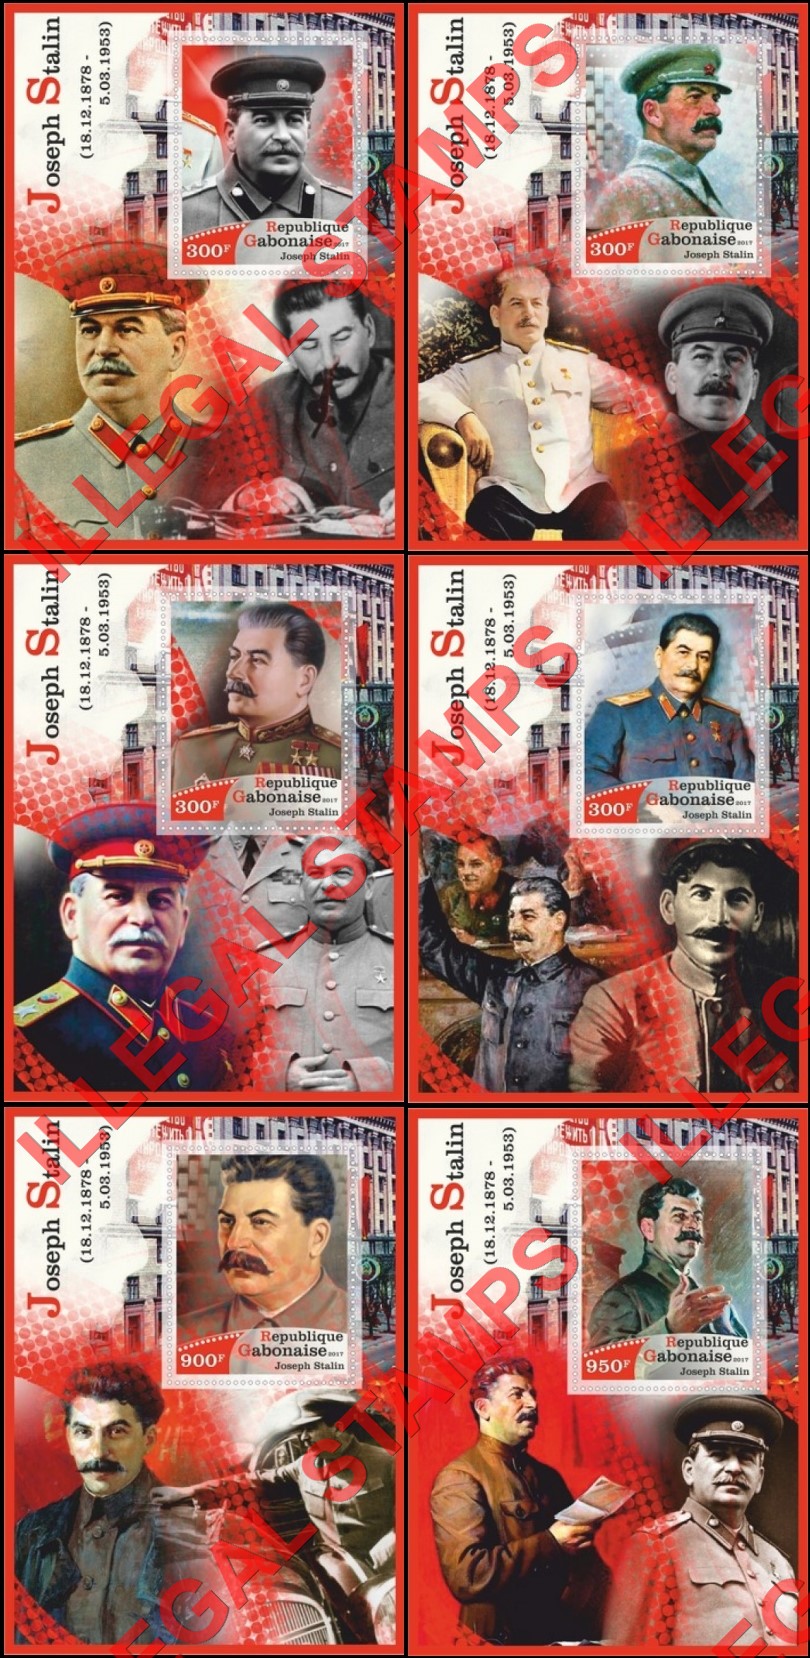 Gabon 2017 Joseph Stalin (different) Illegal Stamp Souvenir Sheets of 1